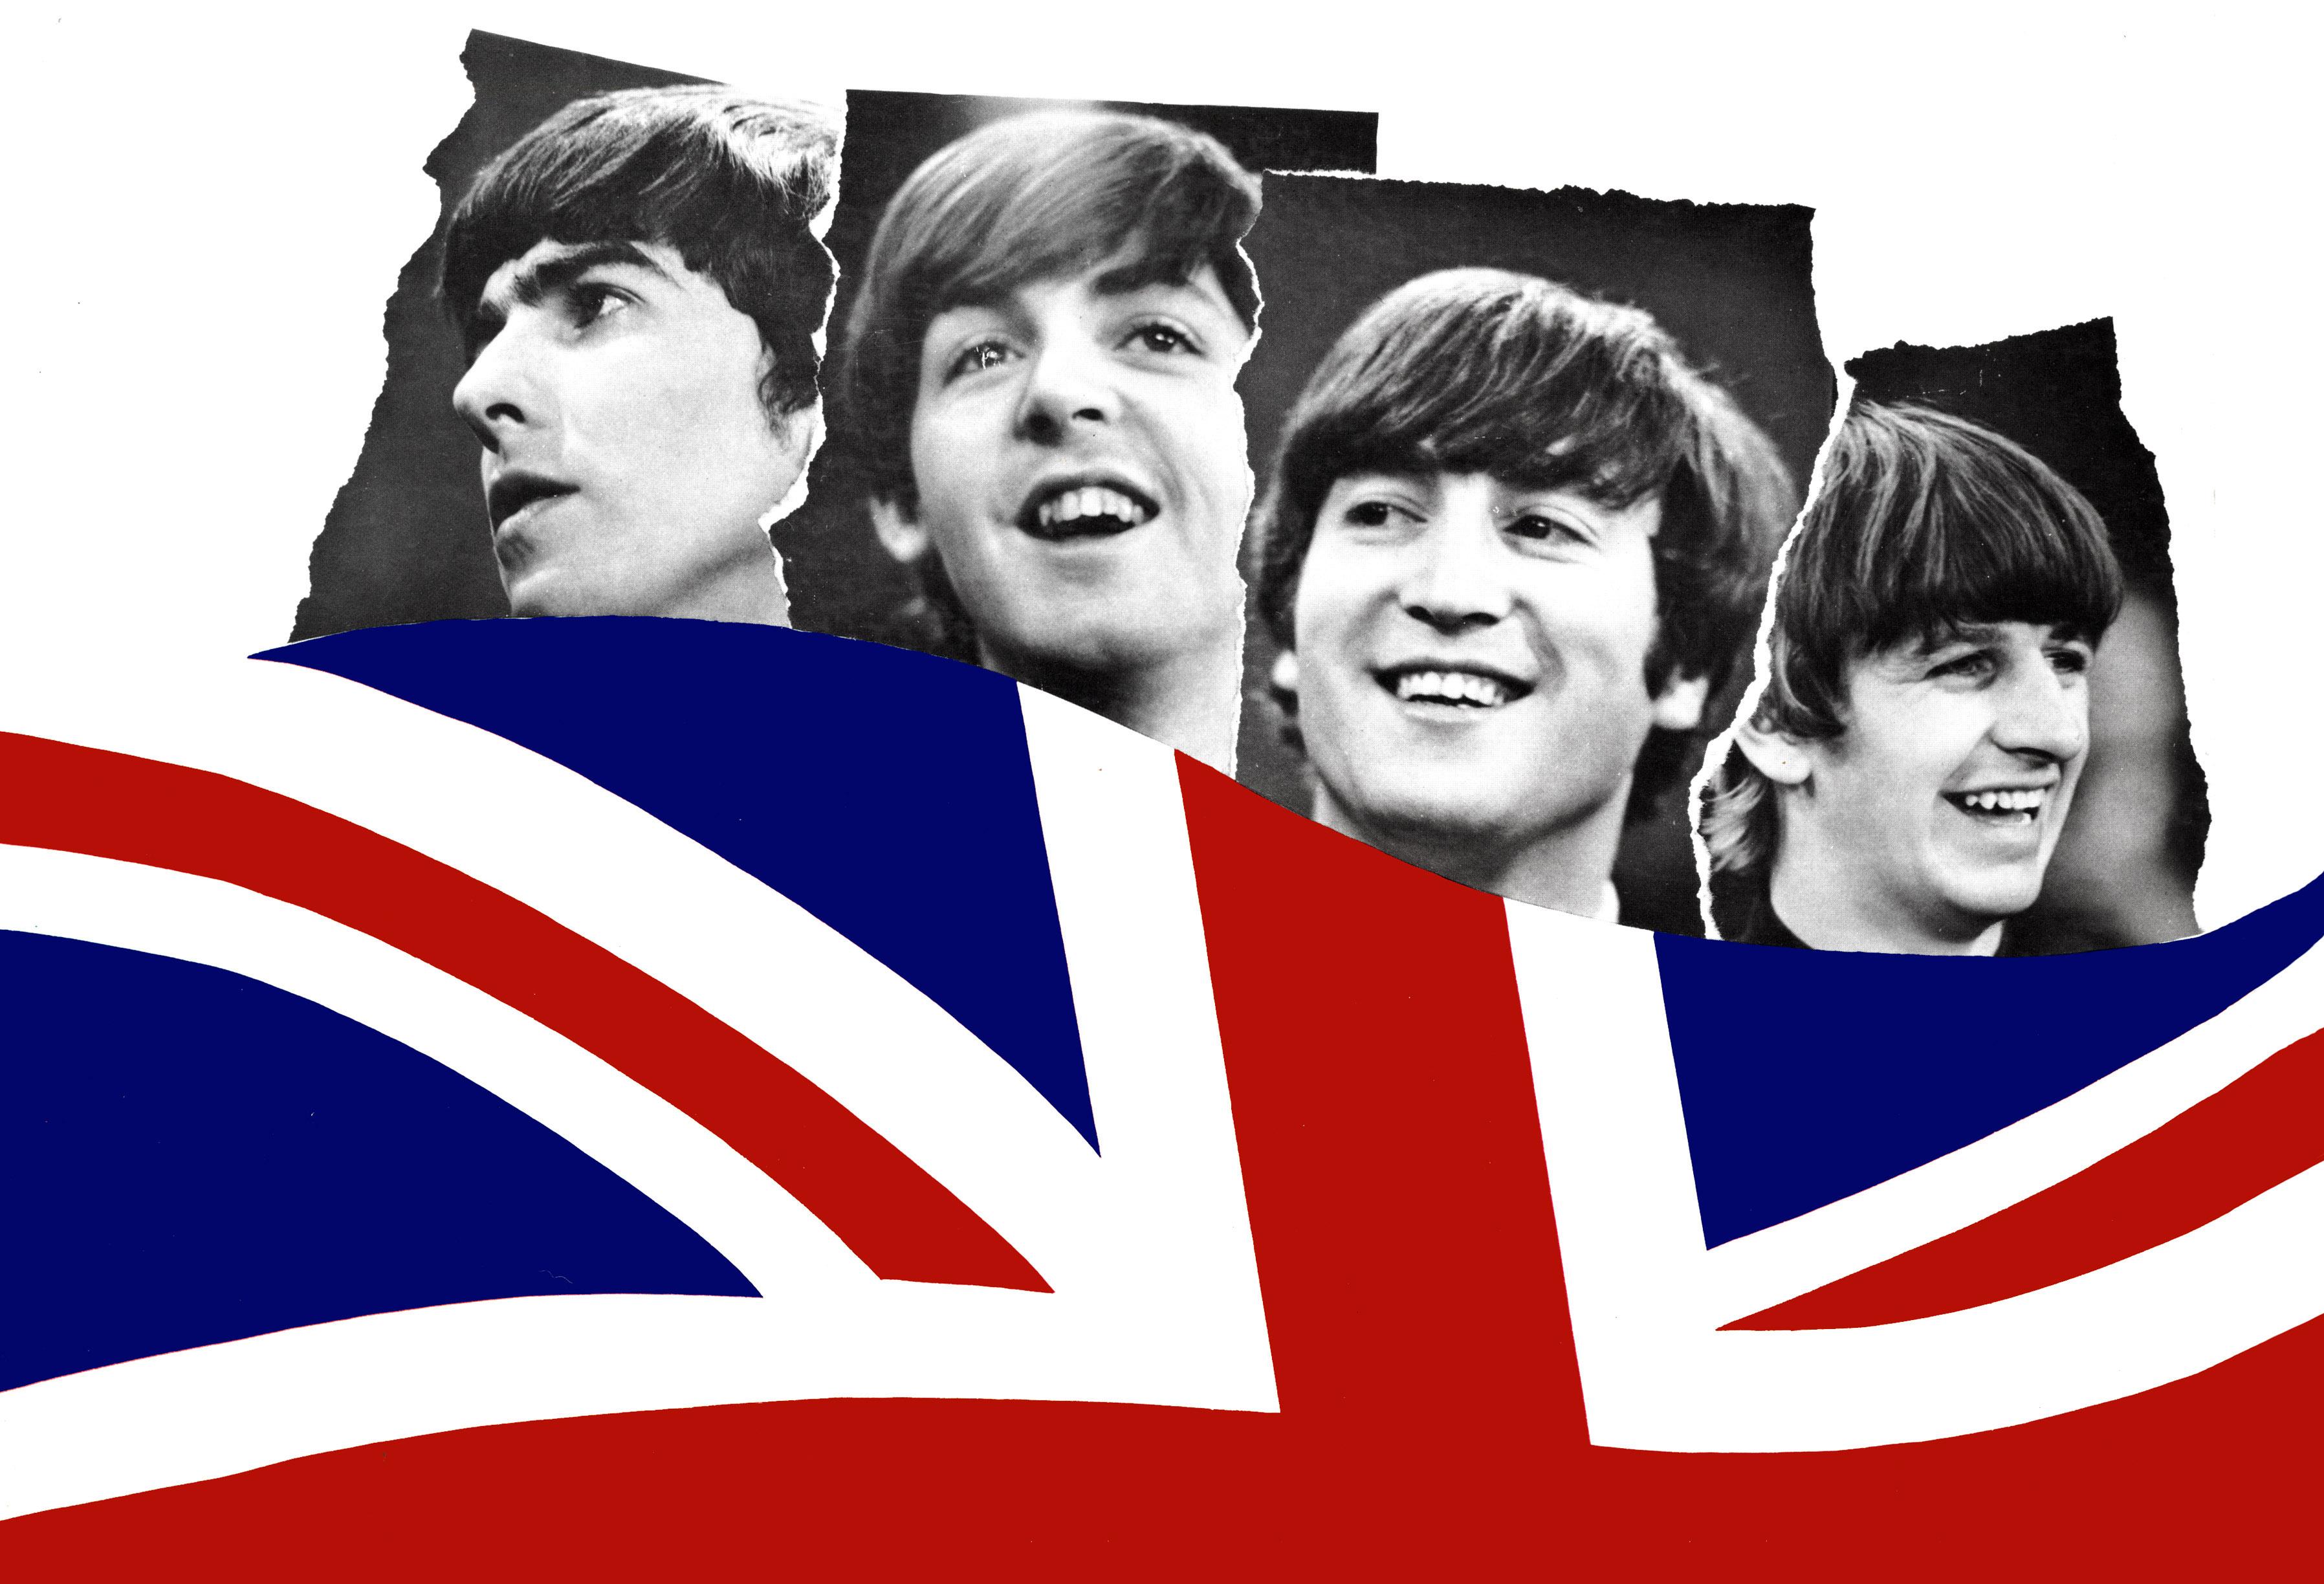 flags, The Beatles - desktop wallpaper